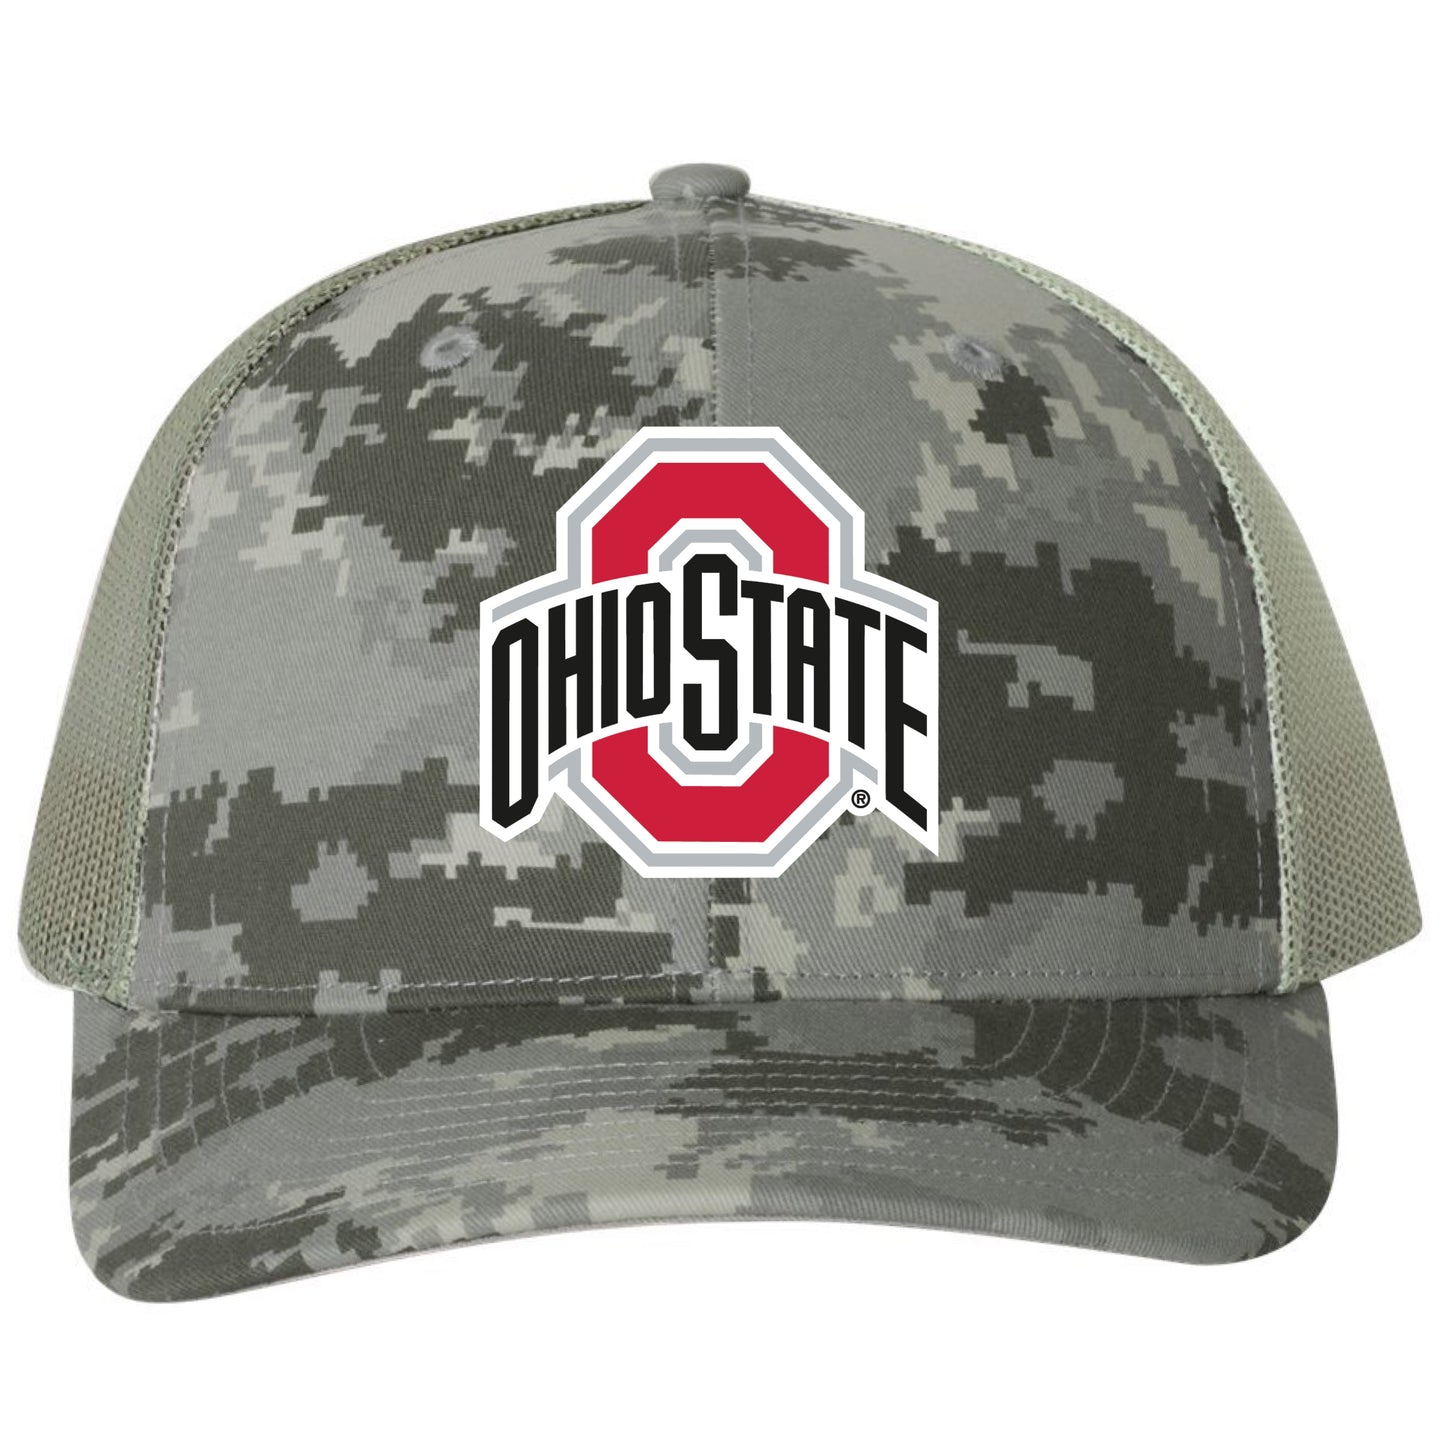 Ohio State Buckeyes 3D Patterned Snapback Trucker Hat- Military Digital Camo - Ten Gallon Hat Co.